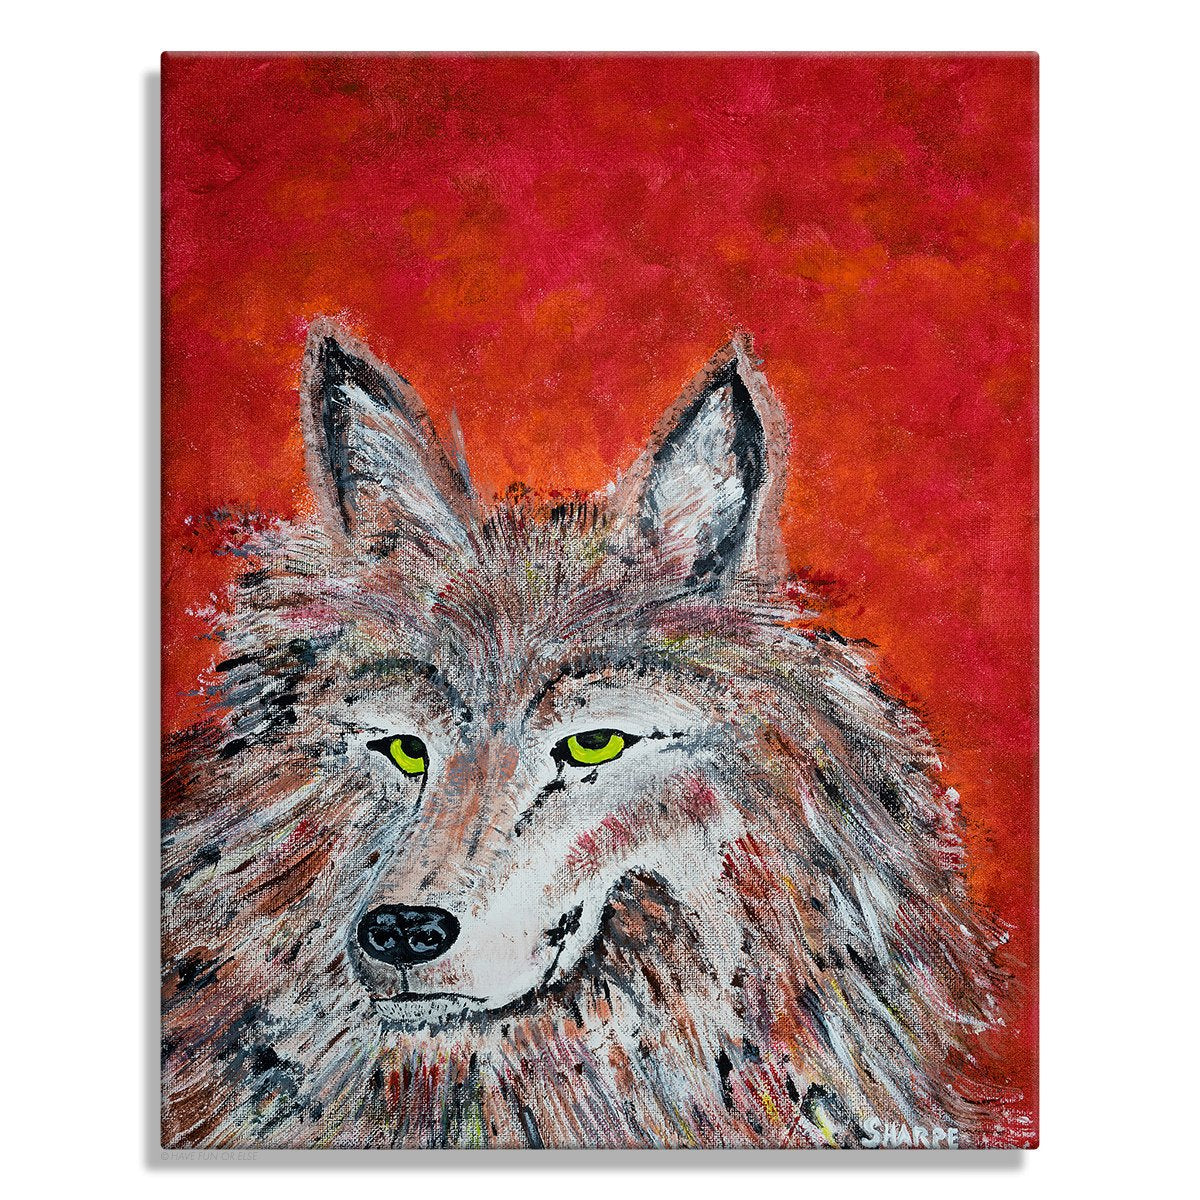 Wily Wolf - Original Painting